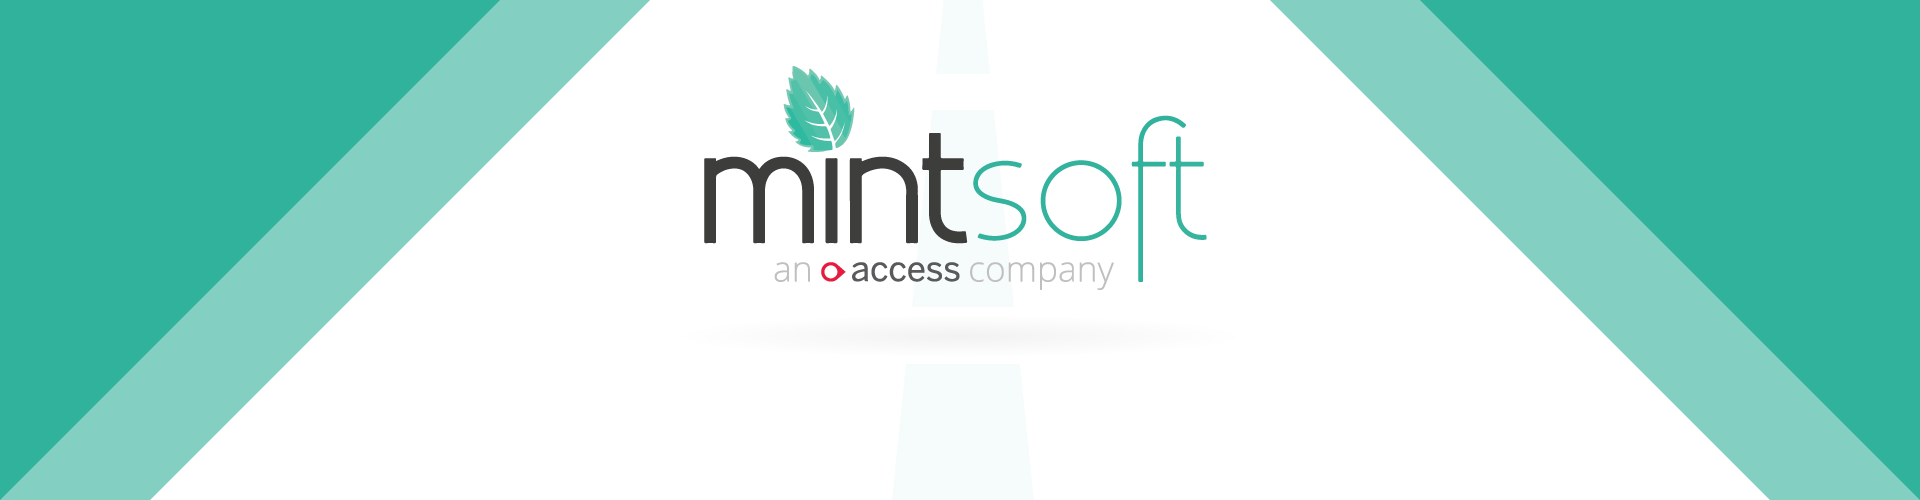 Mintsoft peak season black friday cyber monday festive season deliveries 2021